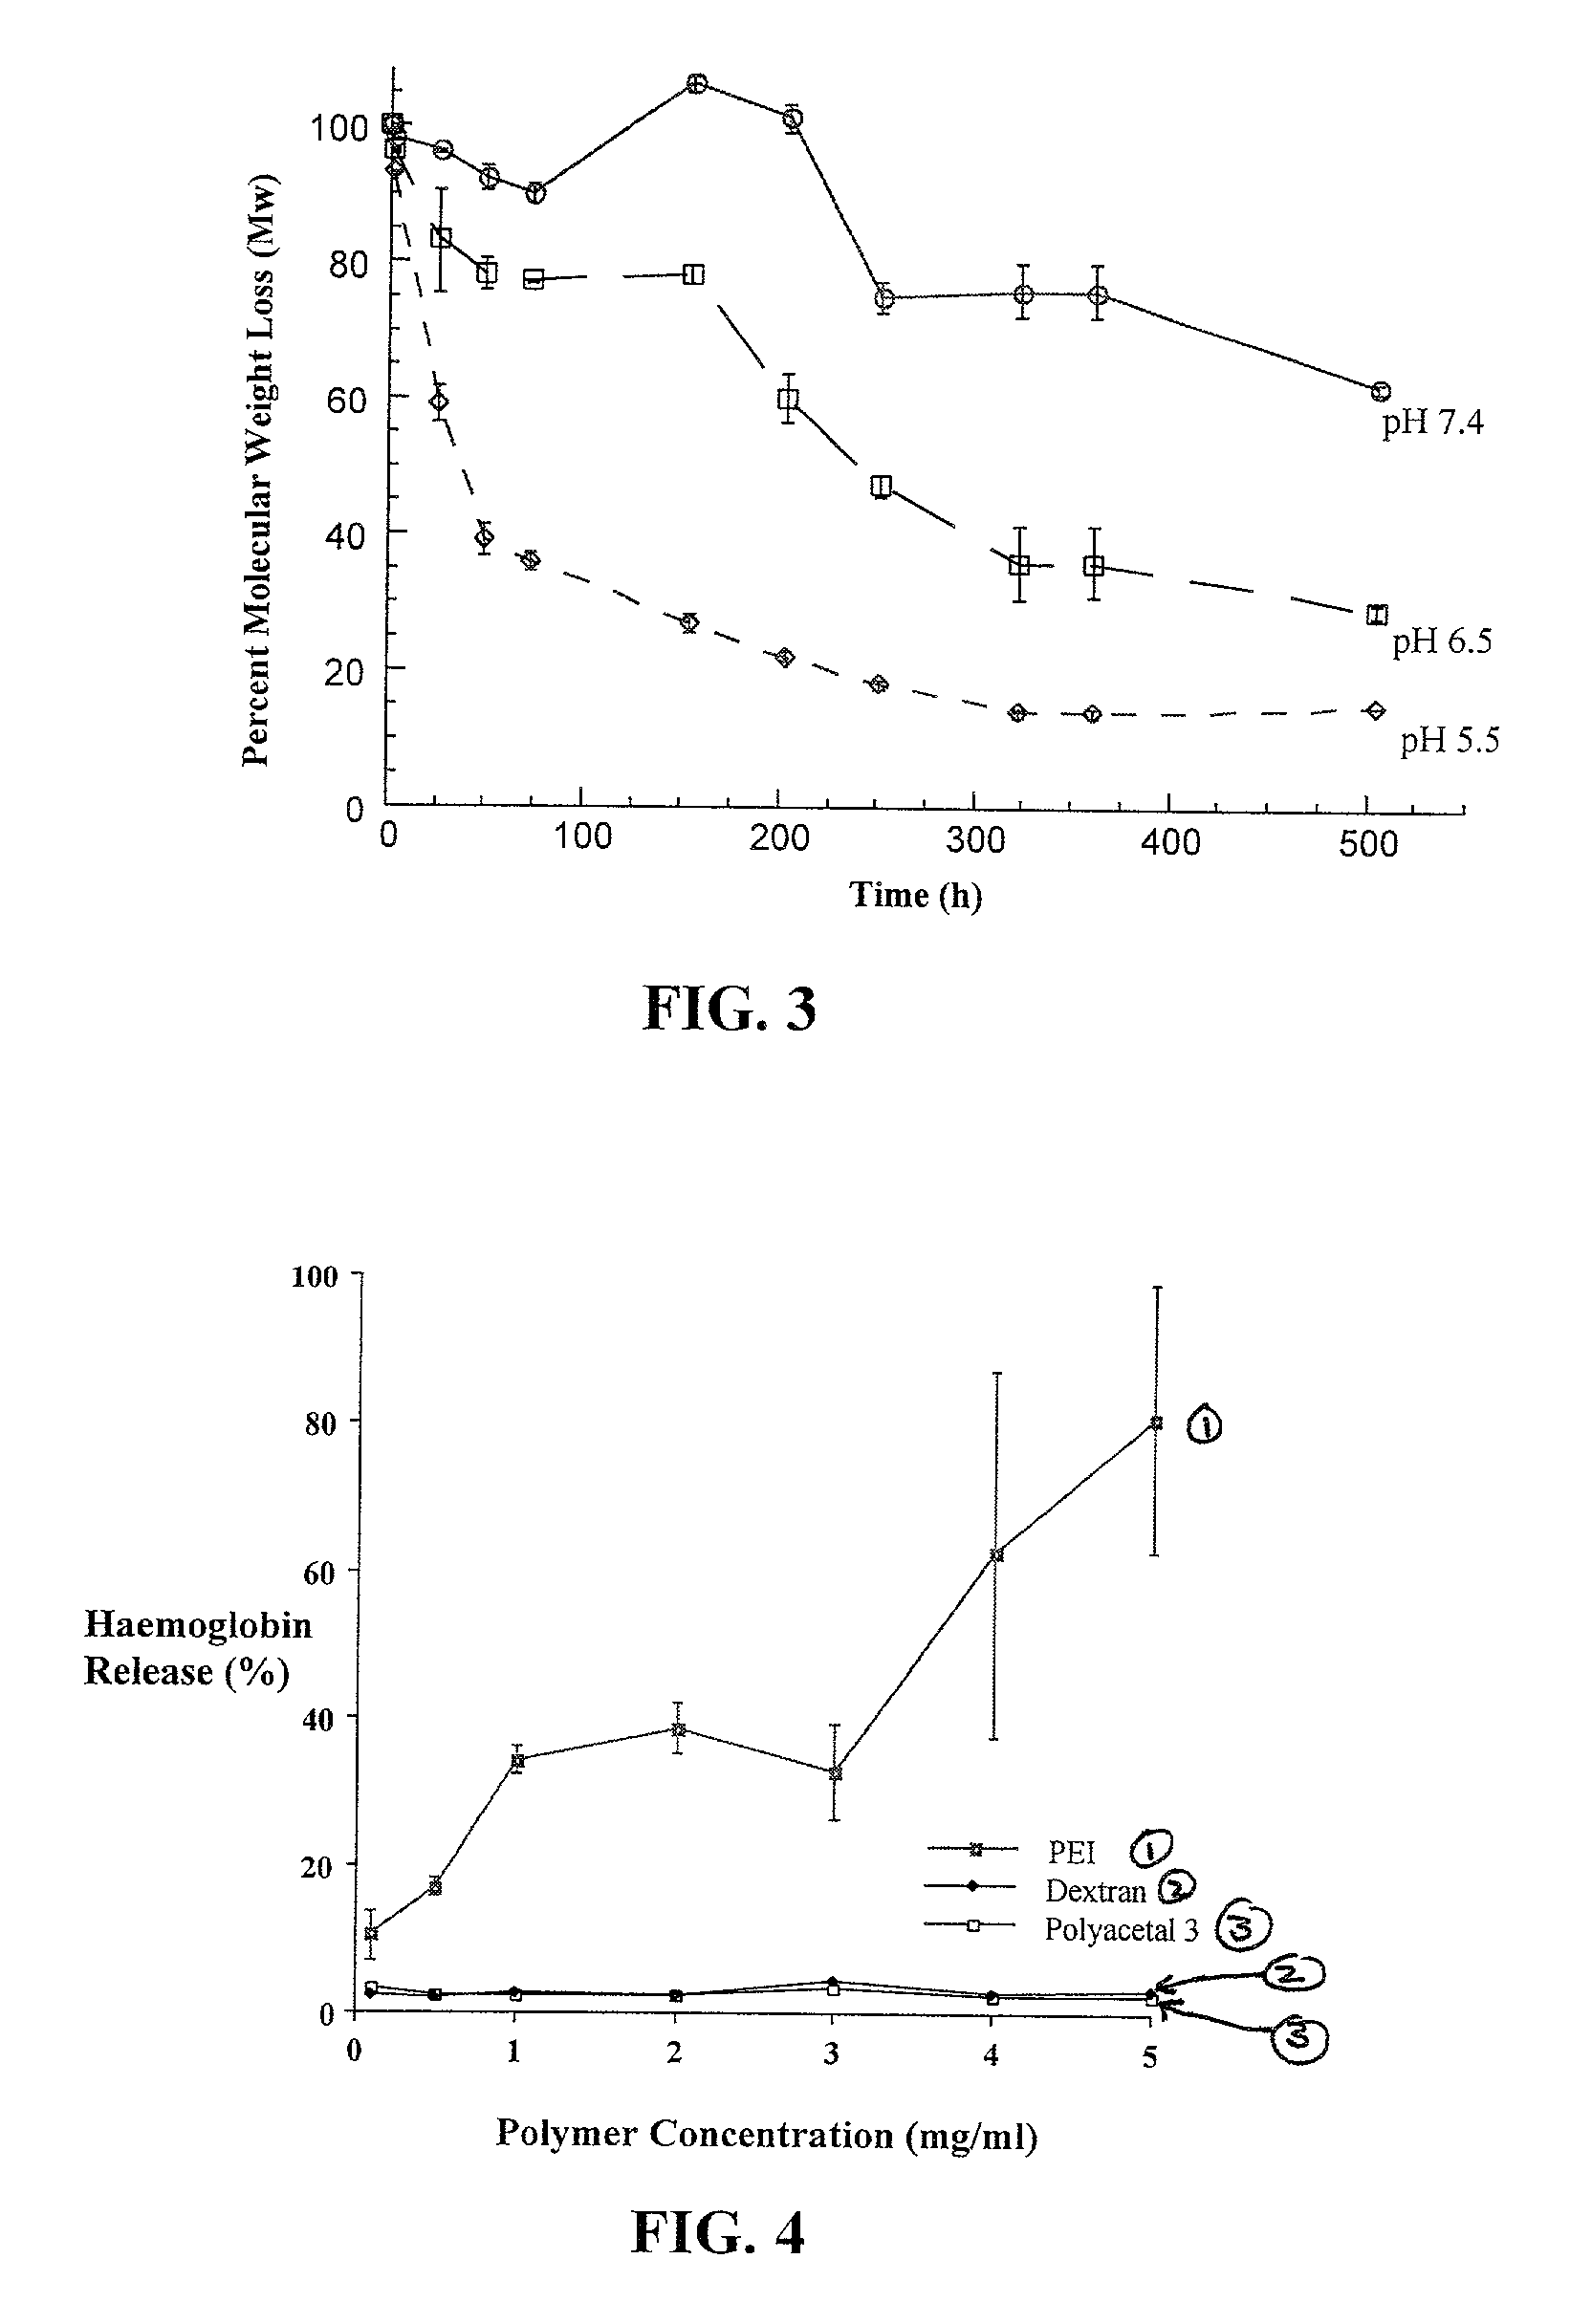 Degradable polyacetal polymers